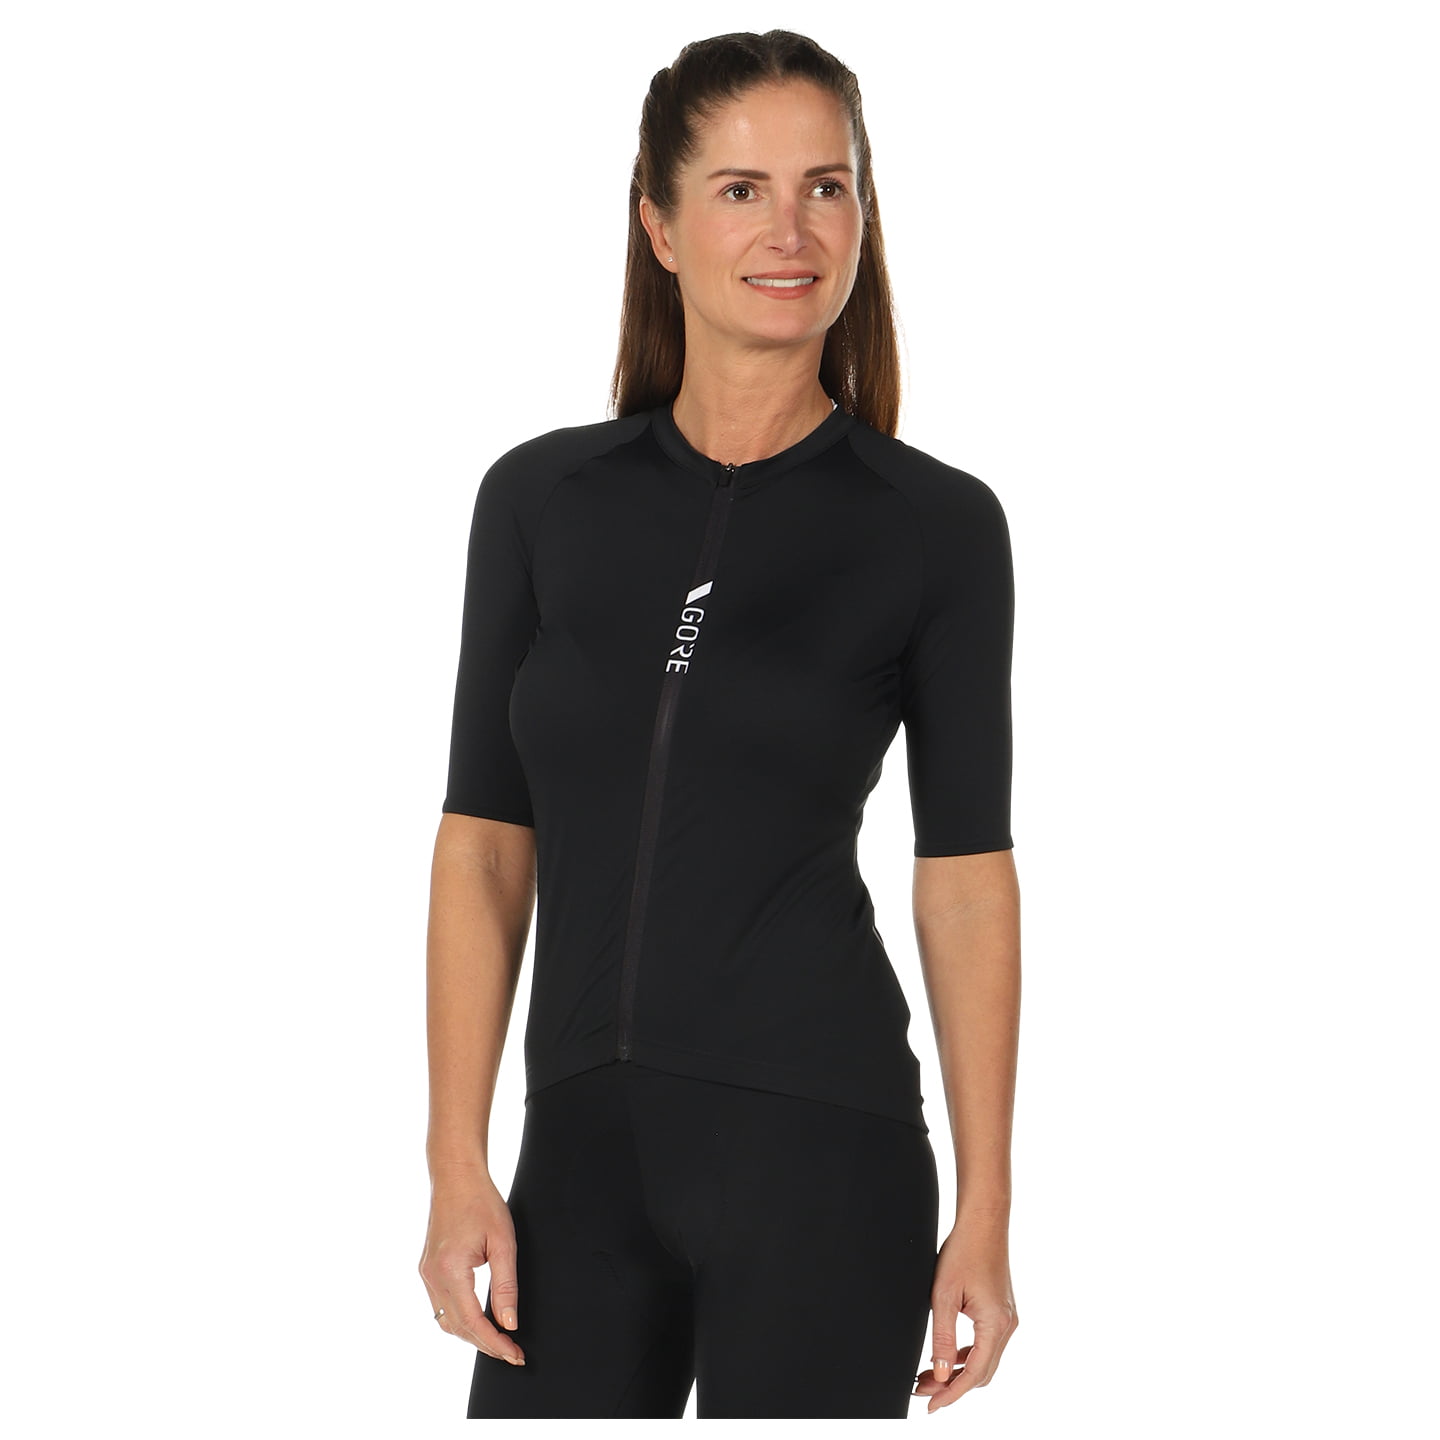 GORE WEAR Torrent Women’s Jersey Women’s Short Sleeve Jersey, size 38, Cycling shirt, Cycling gear